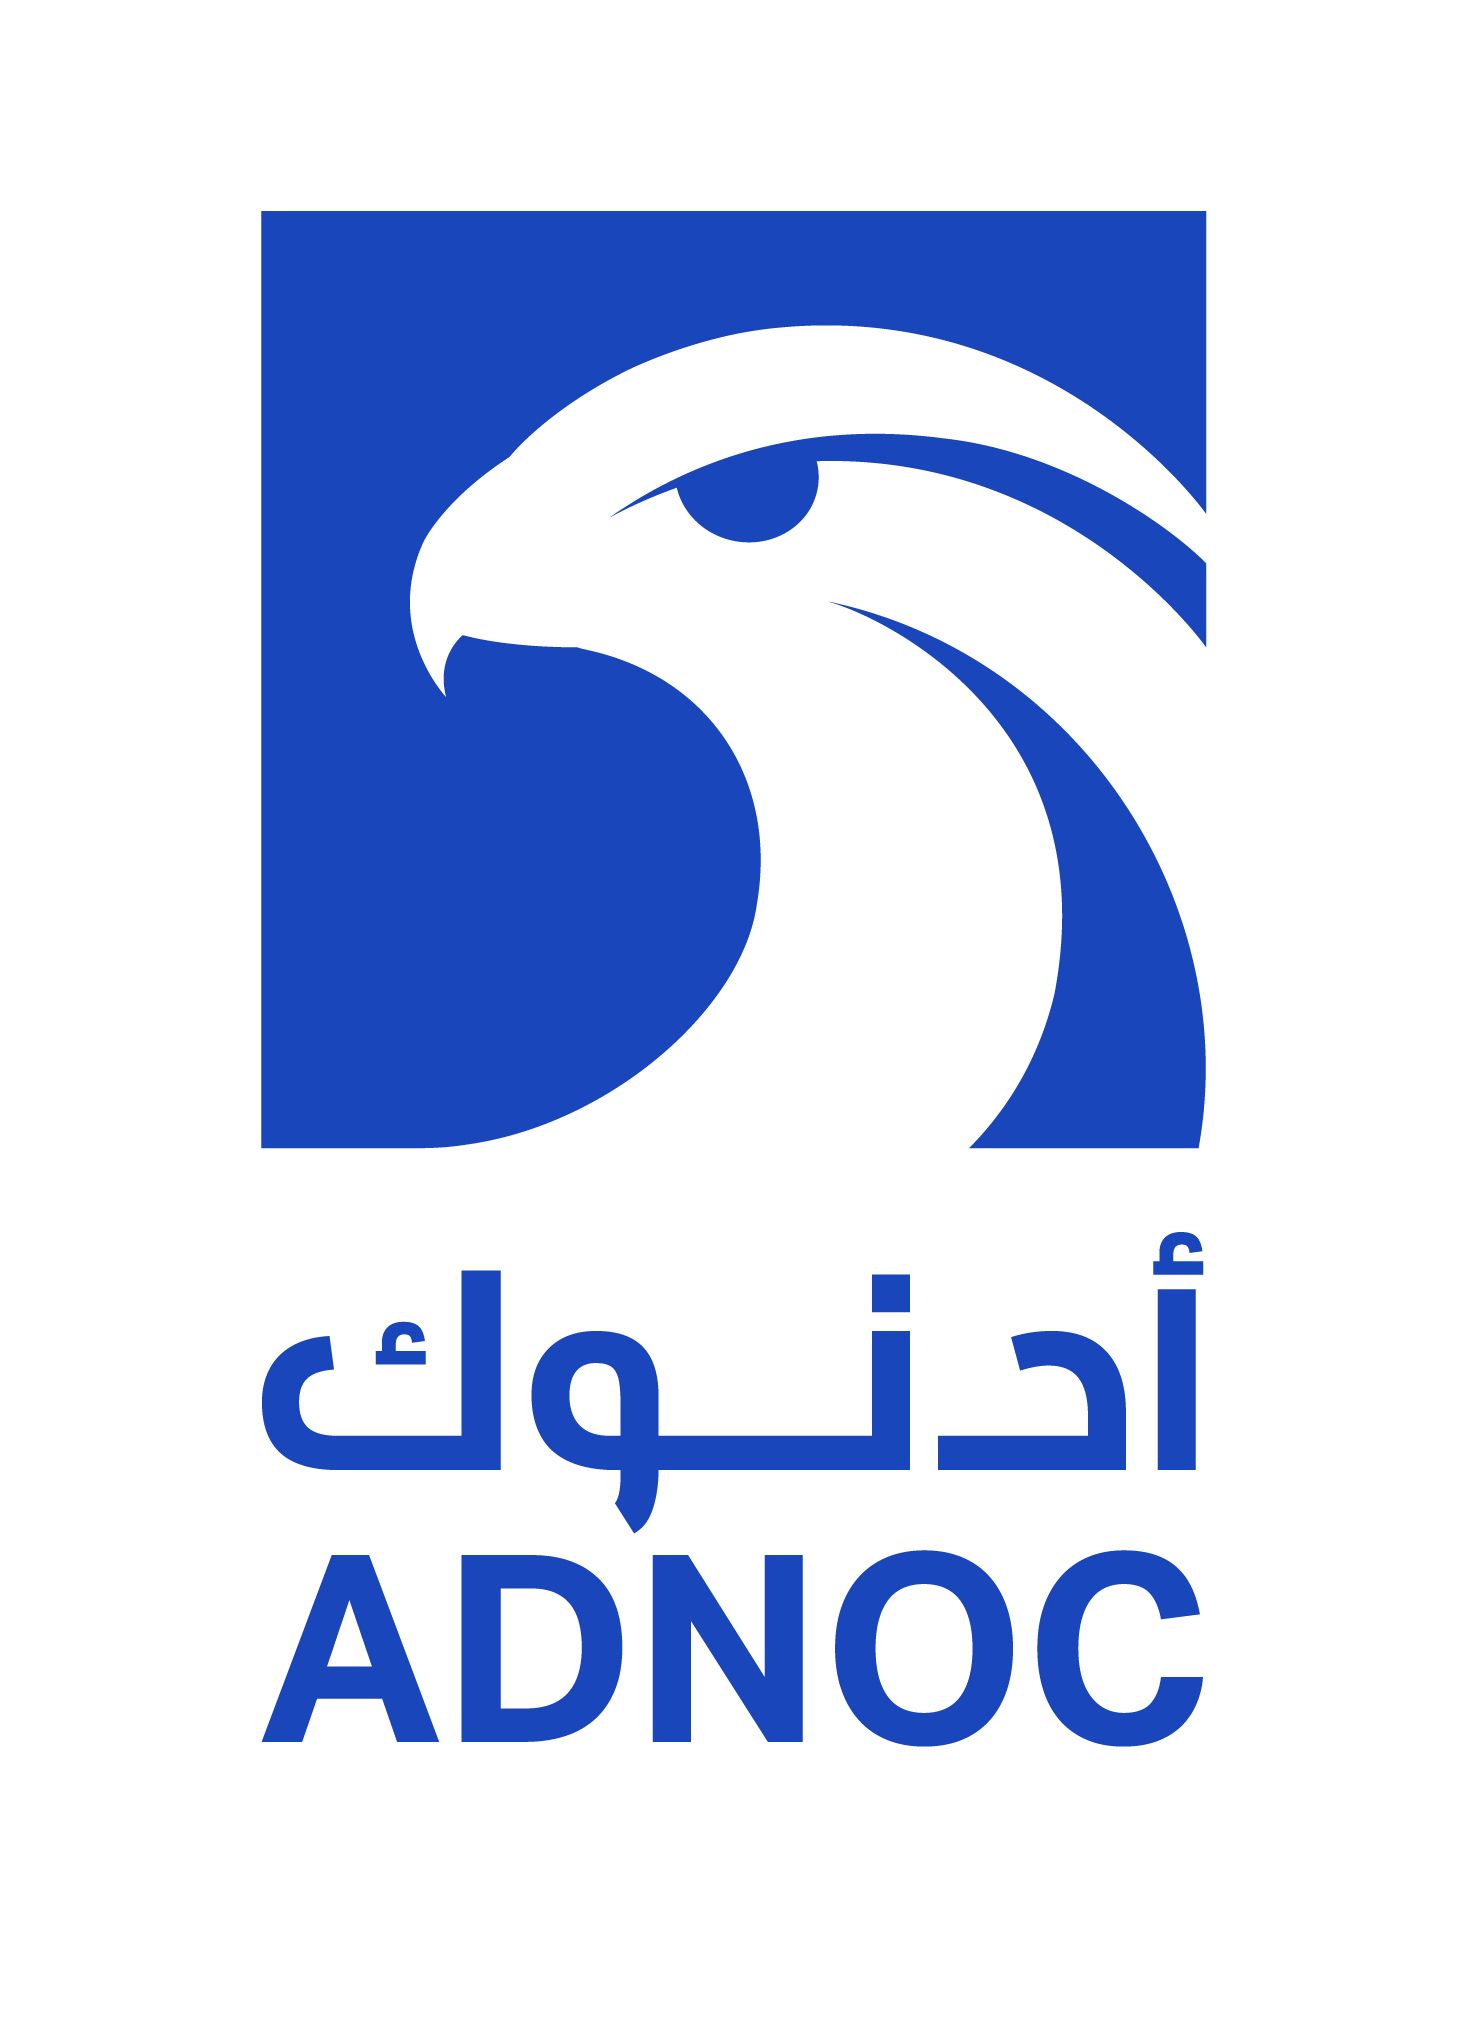 Abu Dhabi National Oil Company (ADNOC)